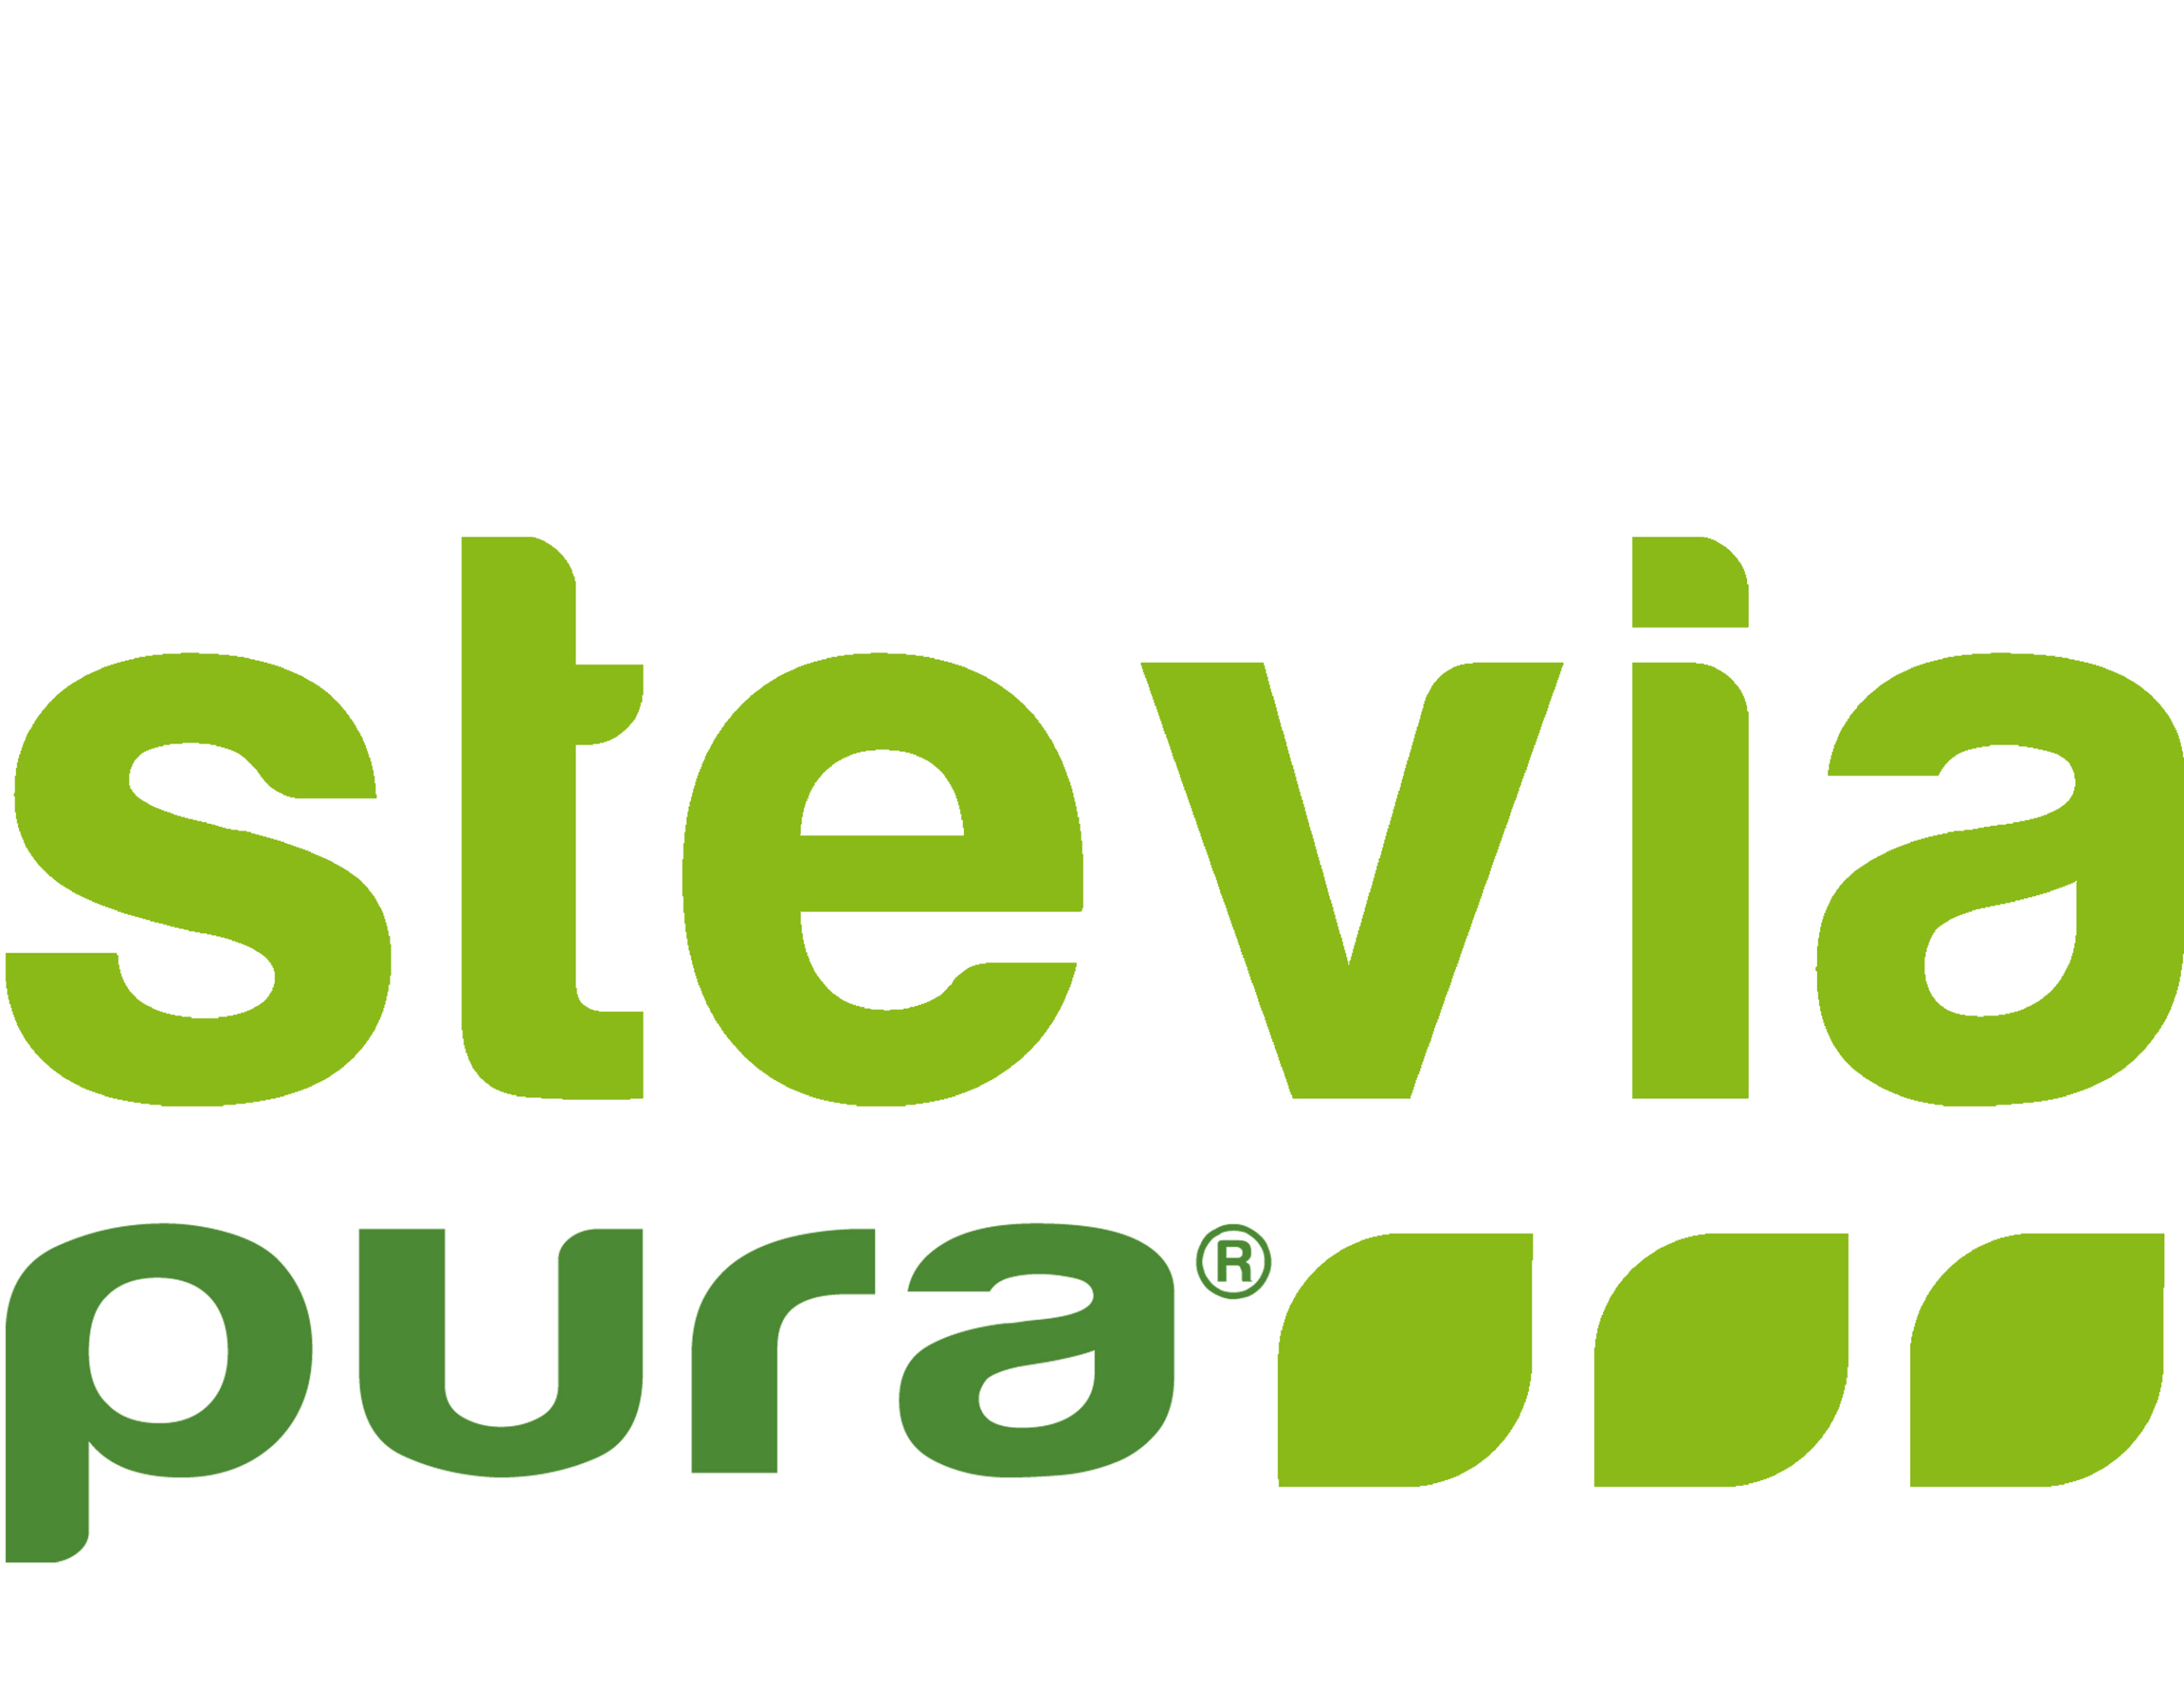 Steviapura - The brand for high-quality Stevia sweeteners